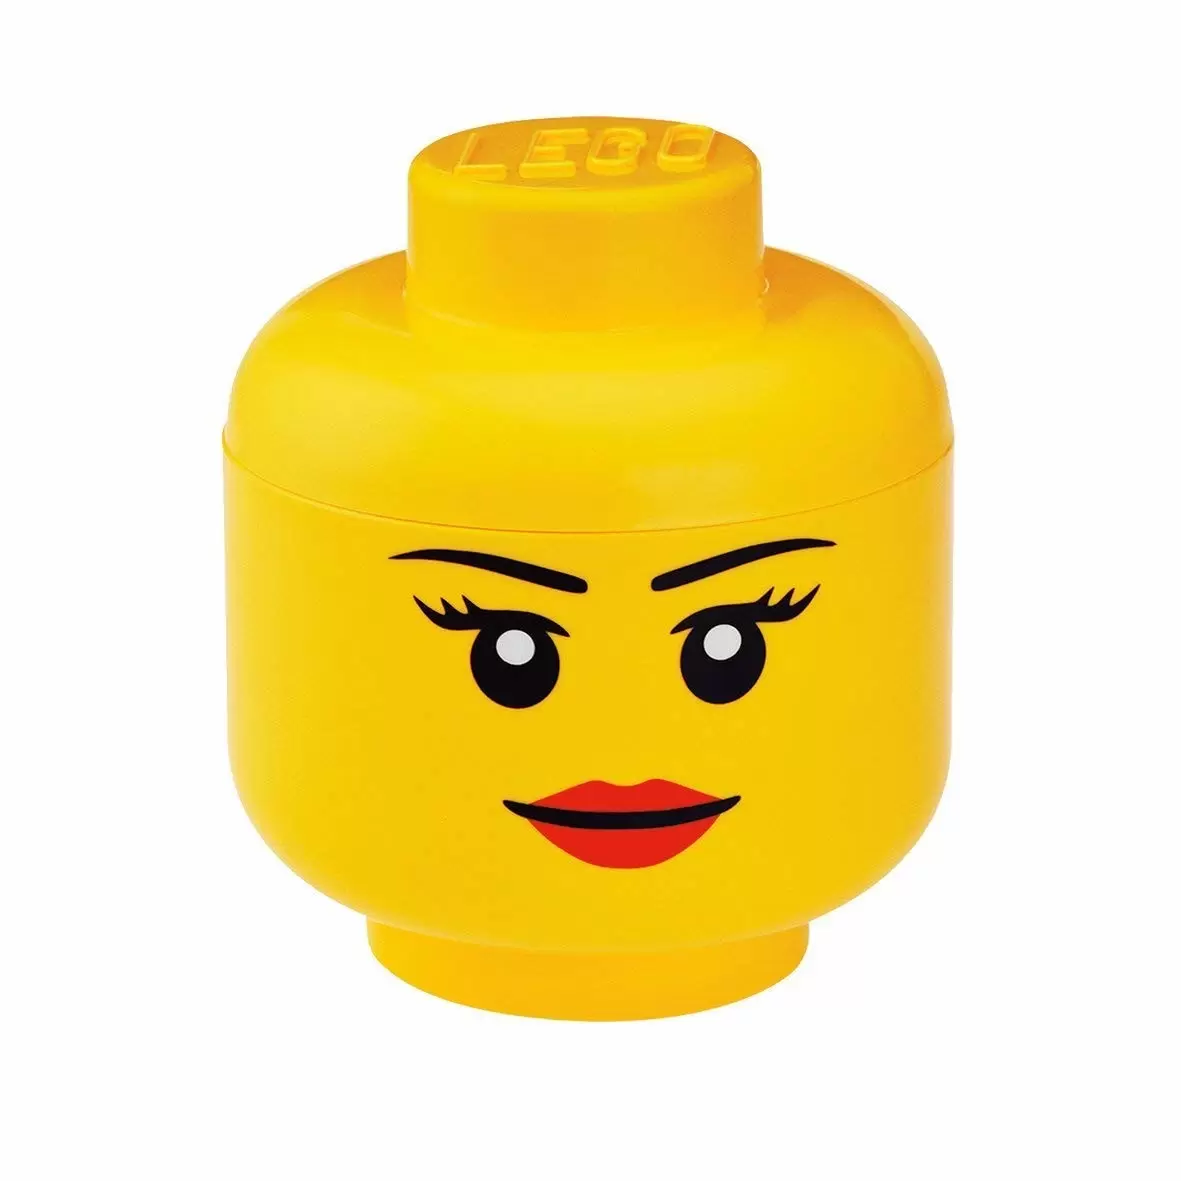 LEGO Storages - Iconic Girls Storage Head - Small